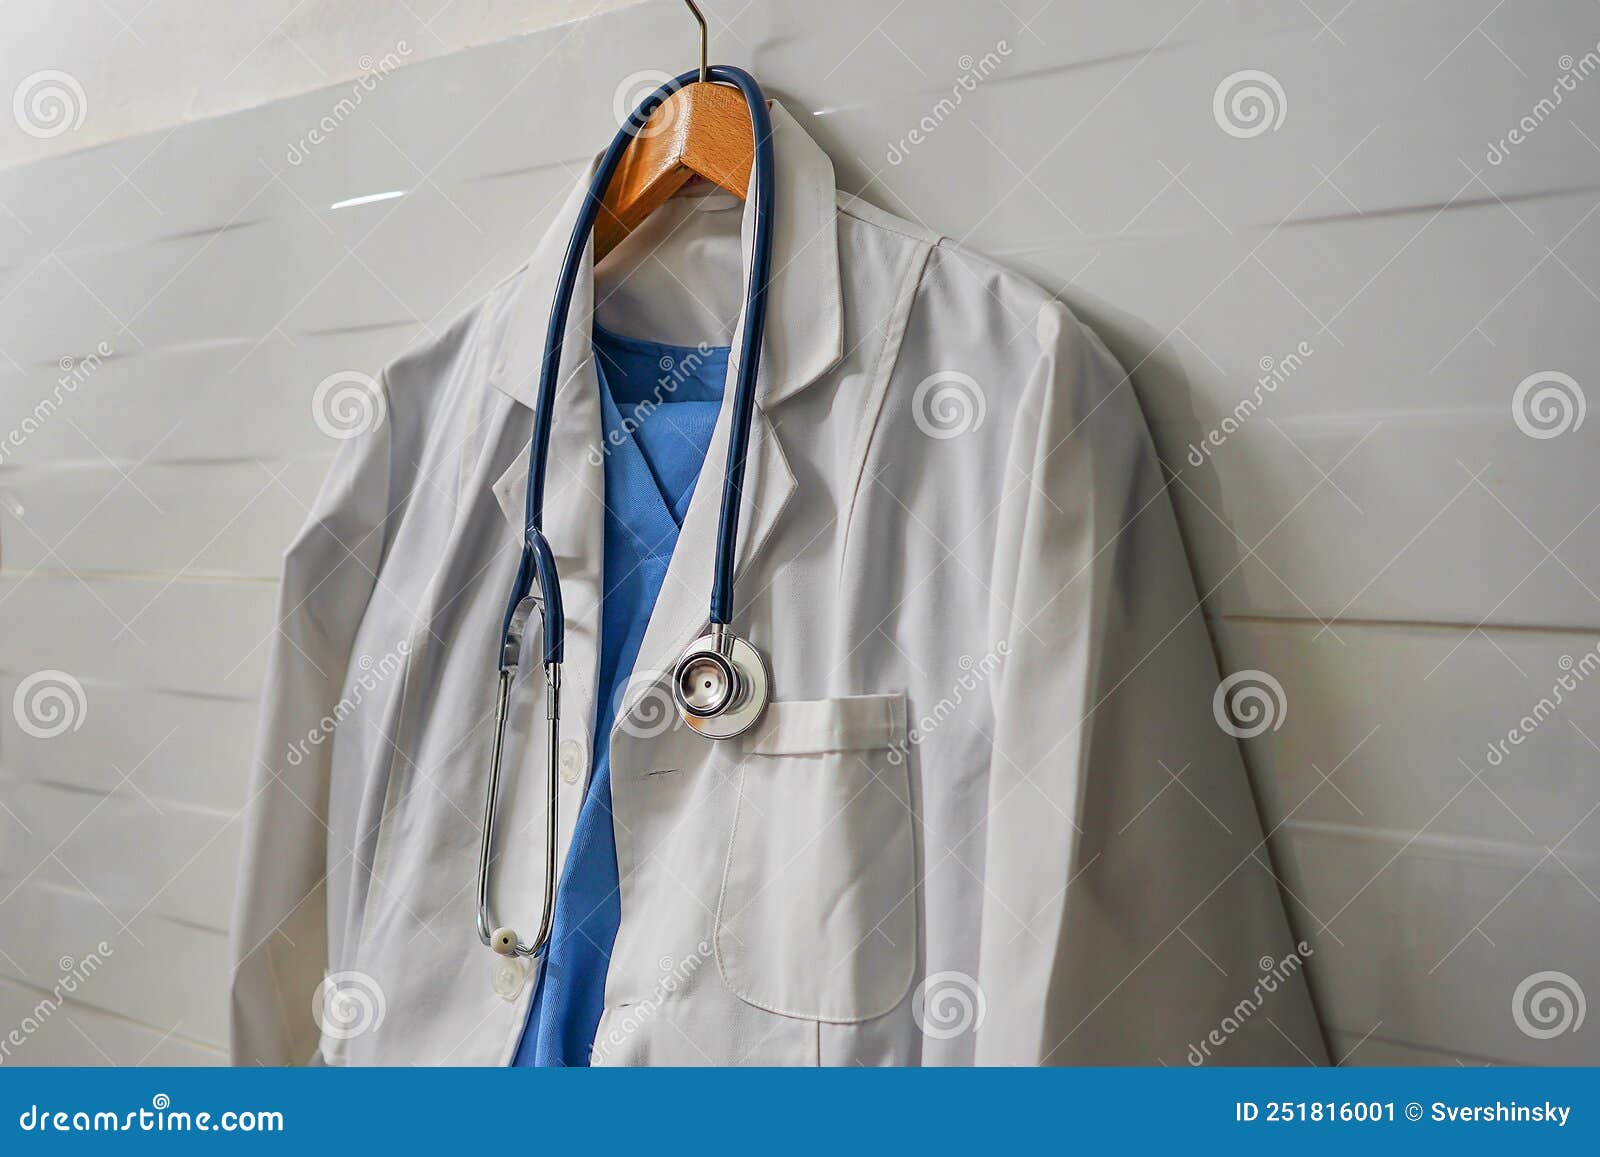 https://thumbs.dreamstime.com/z/white-blue-smock-stethoscope-wooden-hanger-ceramics-wall-background-closeup-doctor-s-scrubs-stethoscope-251816001.jpg